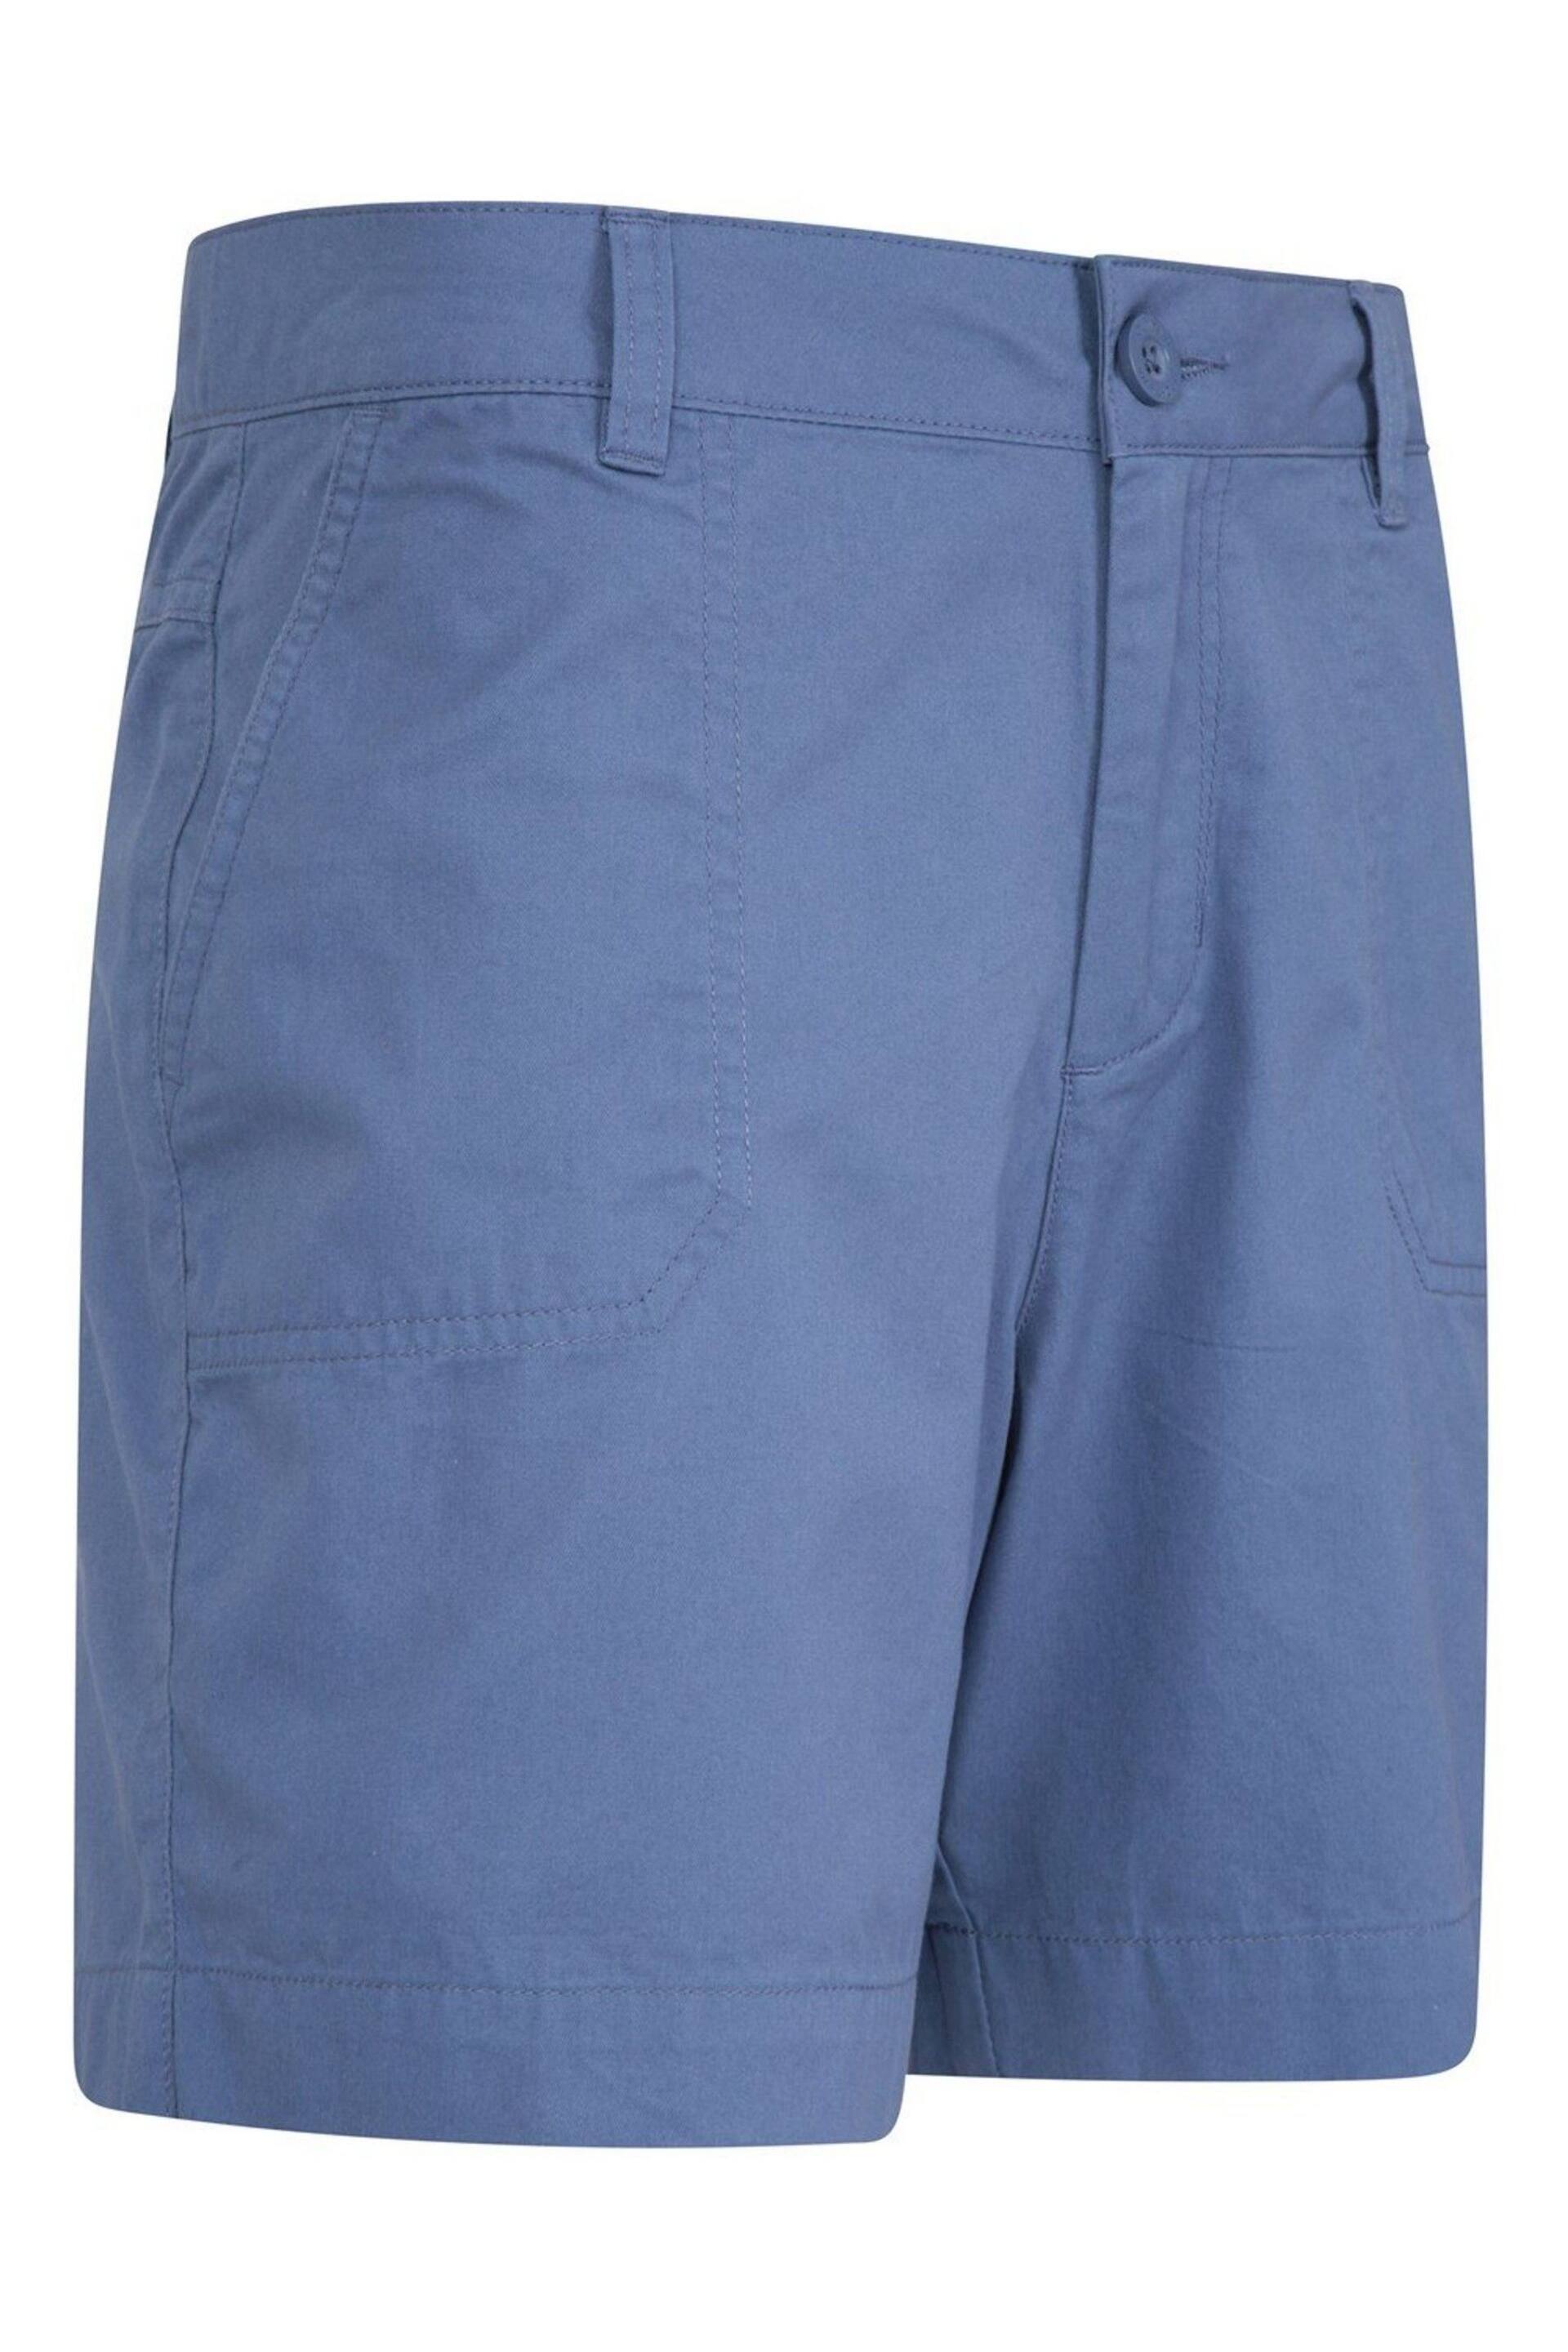 Mountain Warehouse Blue Bayside 100% Organic Cotton Womens Shorts - Image 2 of 4